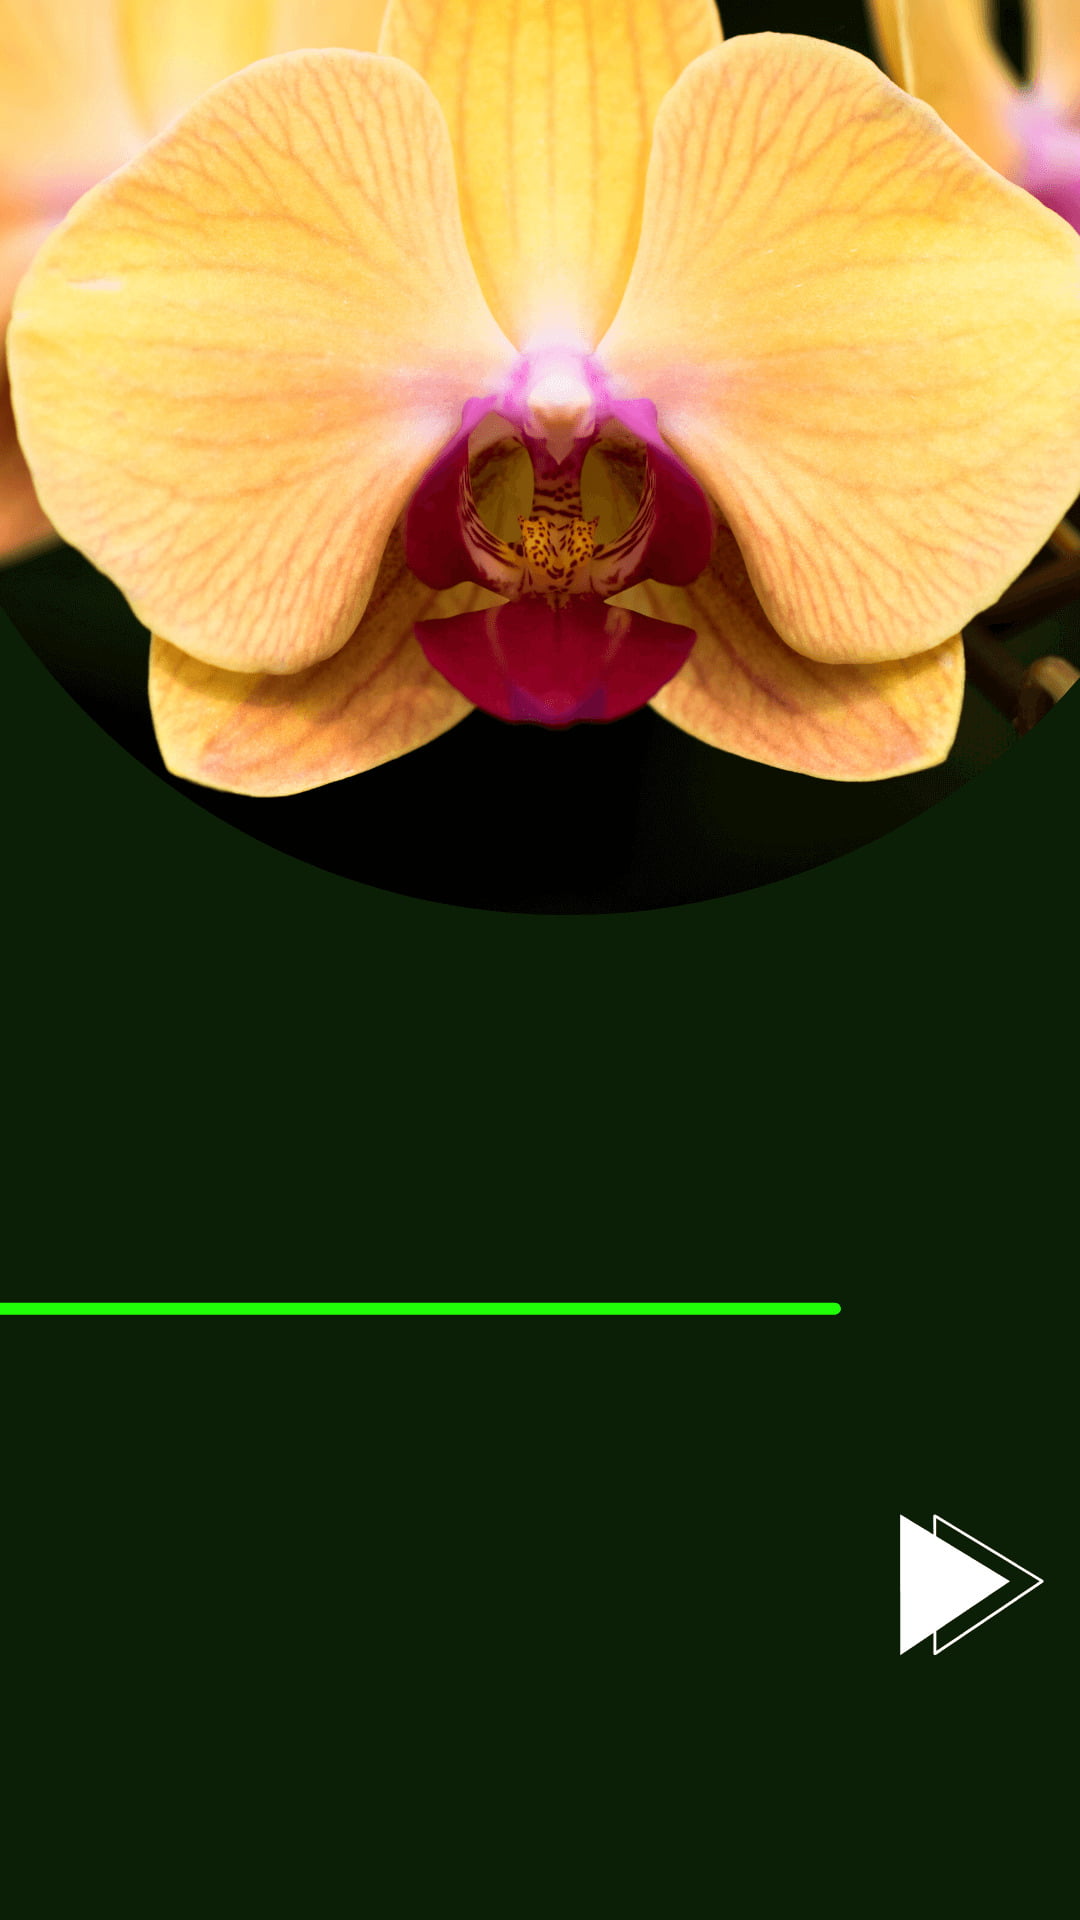 Orquídeas Phalaenopsis - Espécies raras e lindas! - Jardim das orquídeas  Online